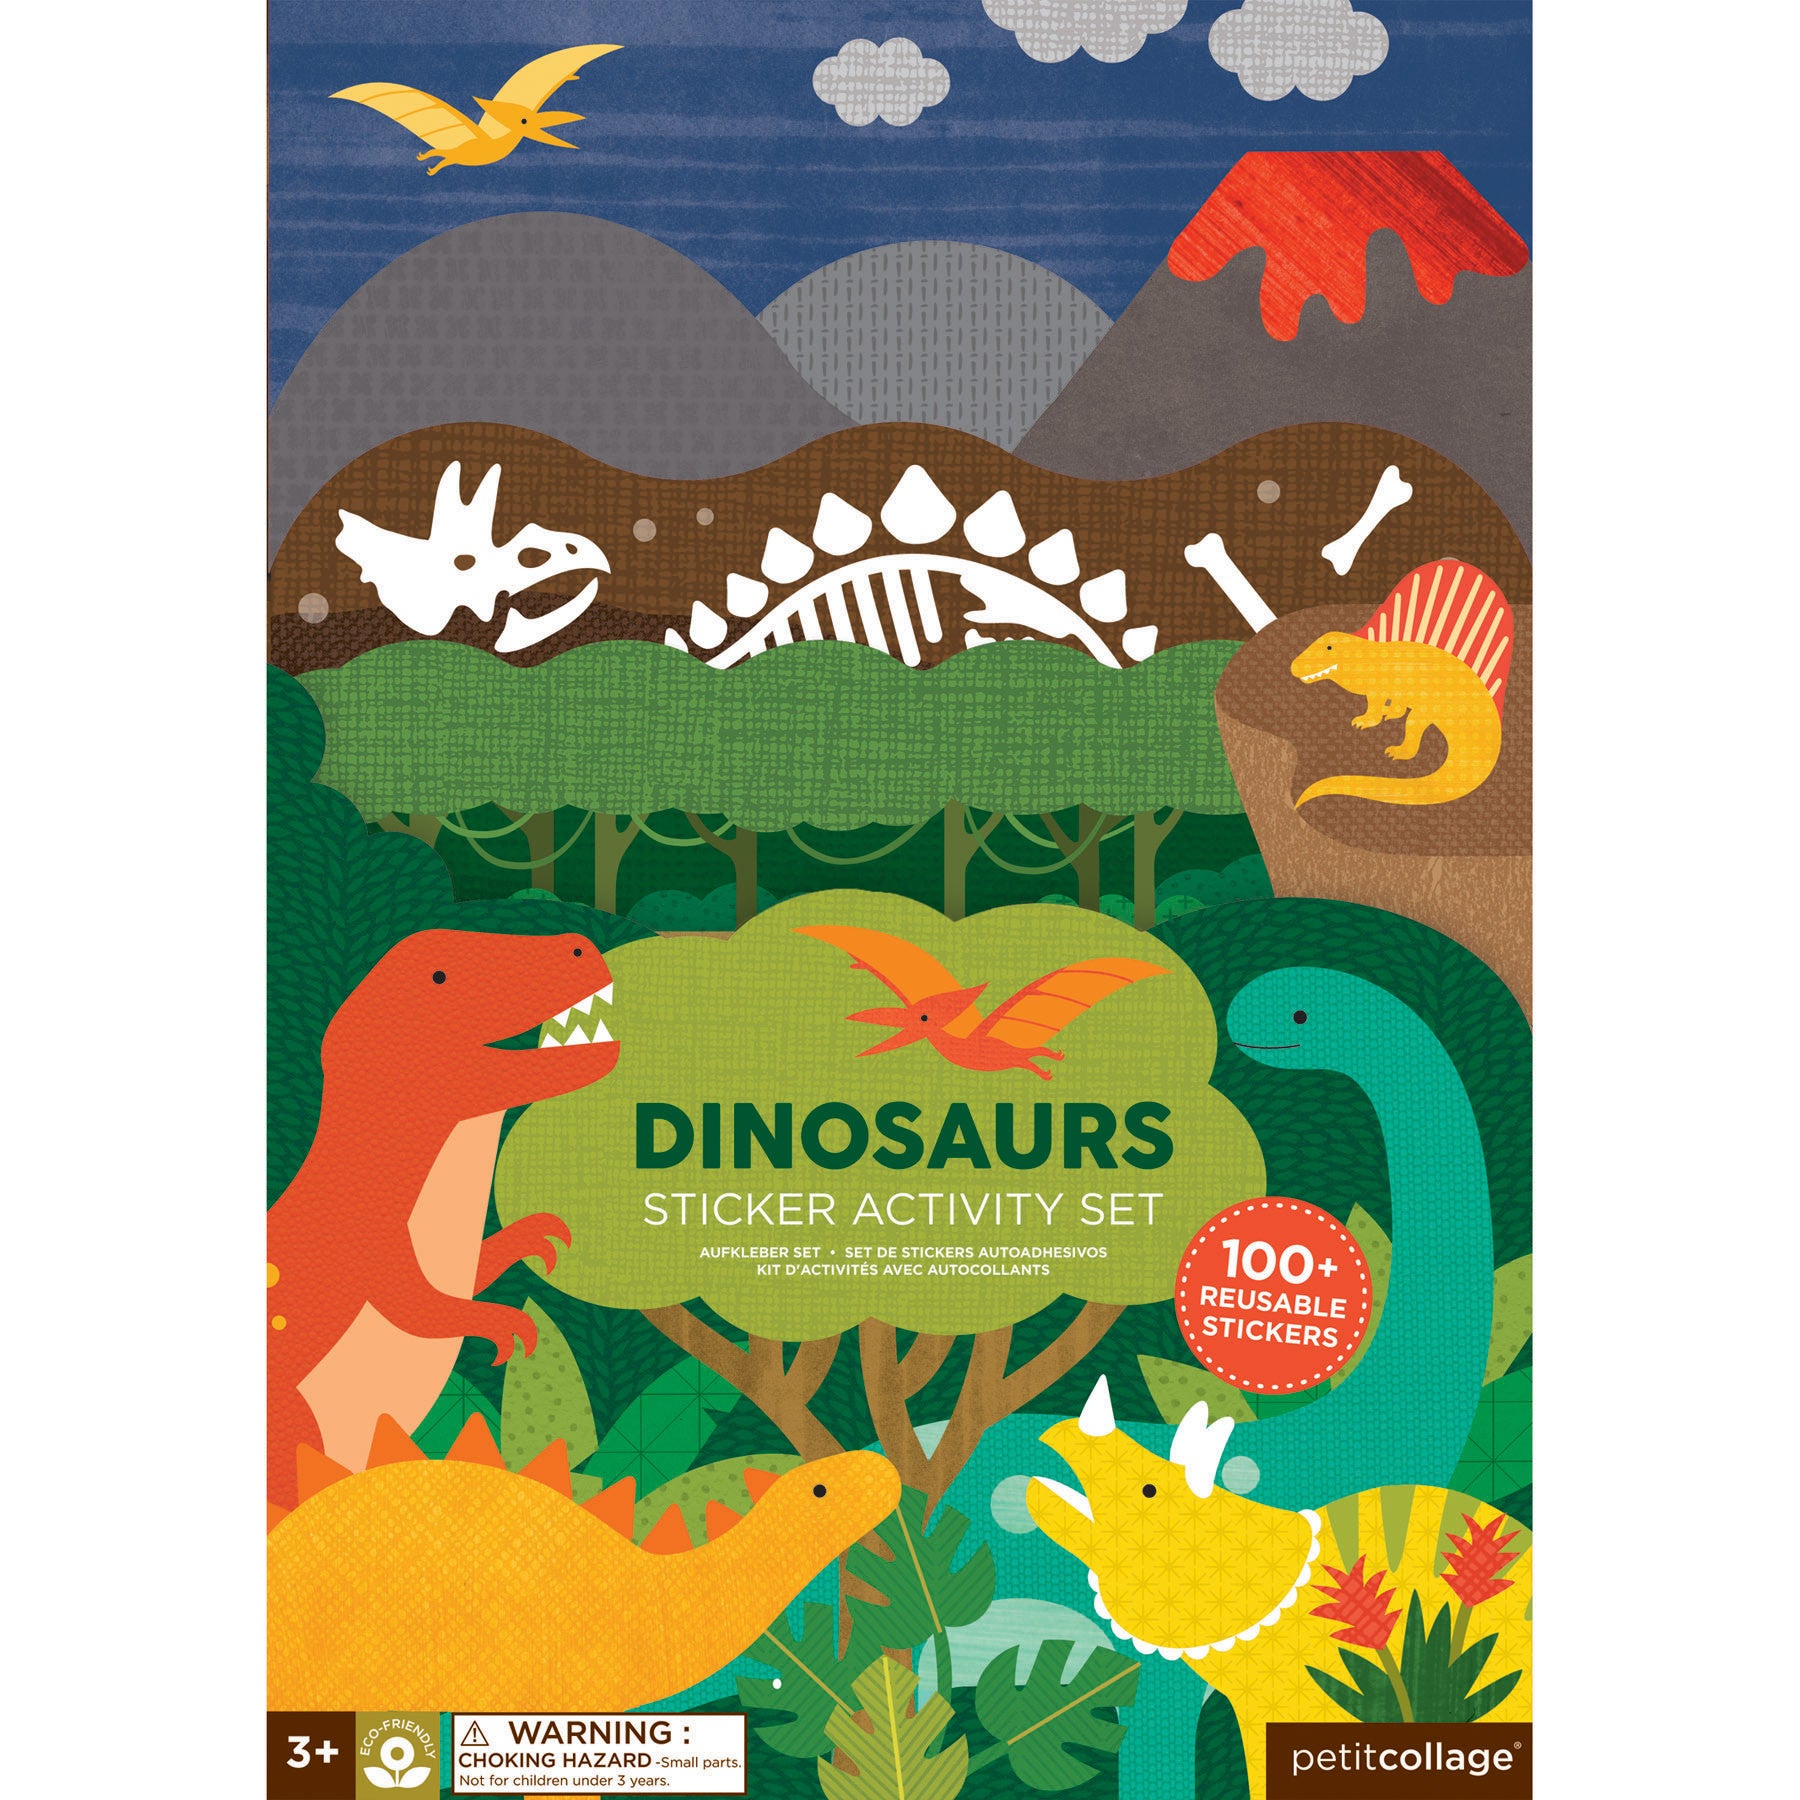 Dinosaurs Sticker Activity Set